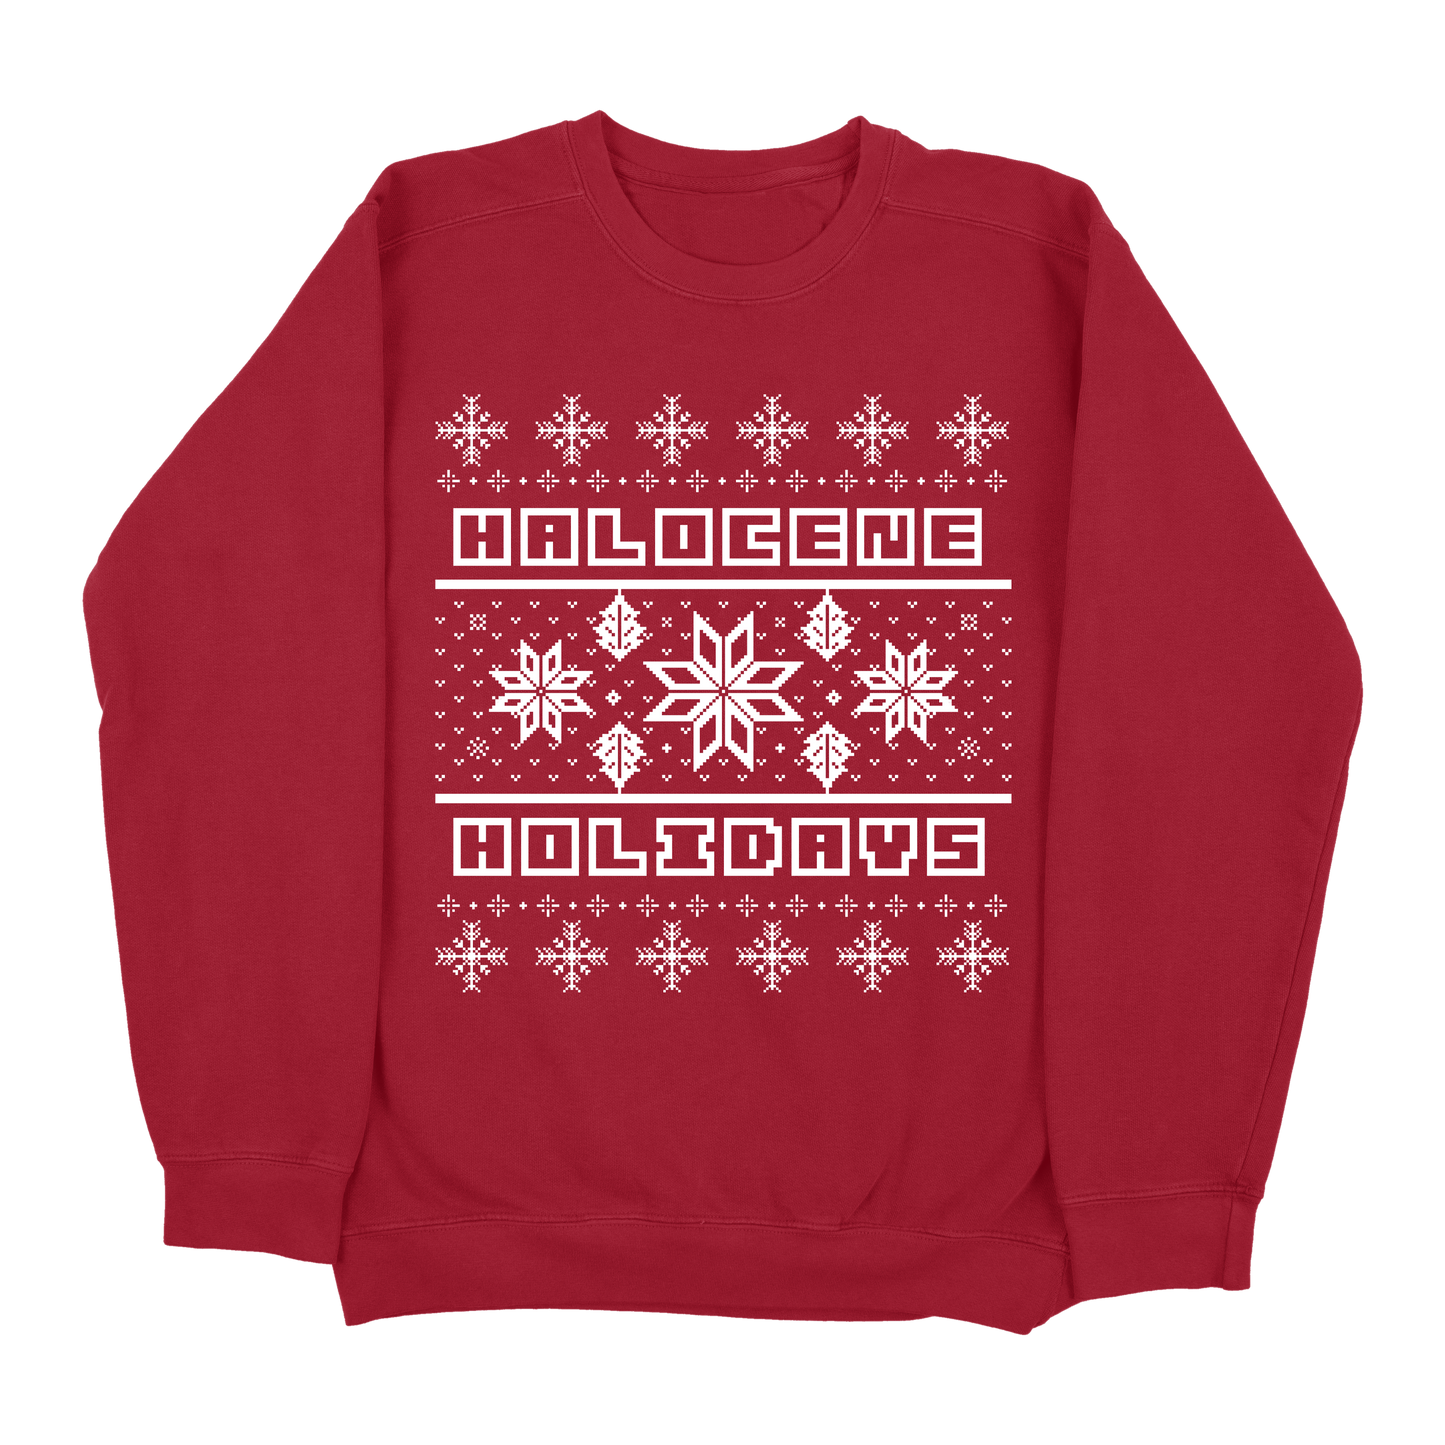 Halocene Holiday Sweater